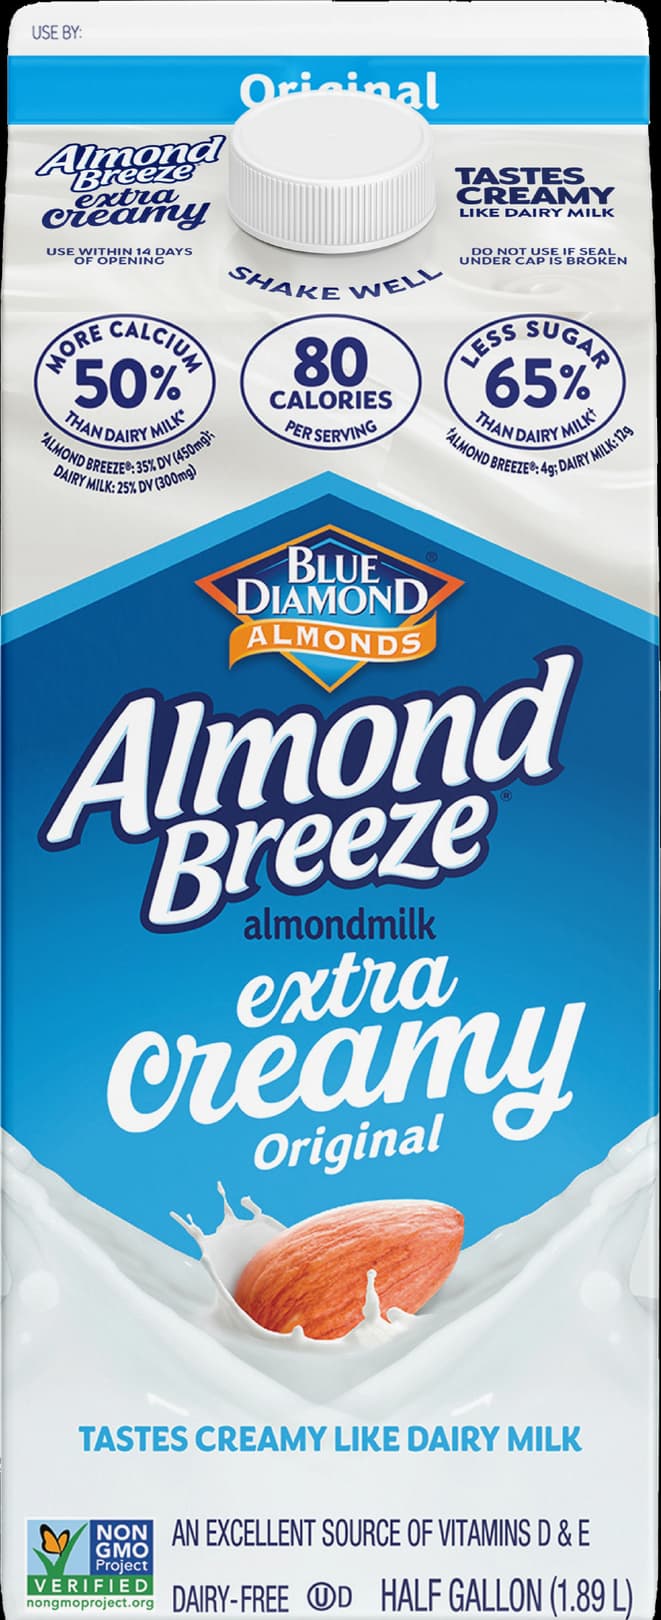 Extra Creamy Original Almond Breeze Almondmilk